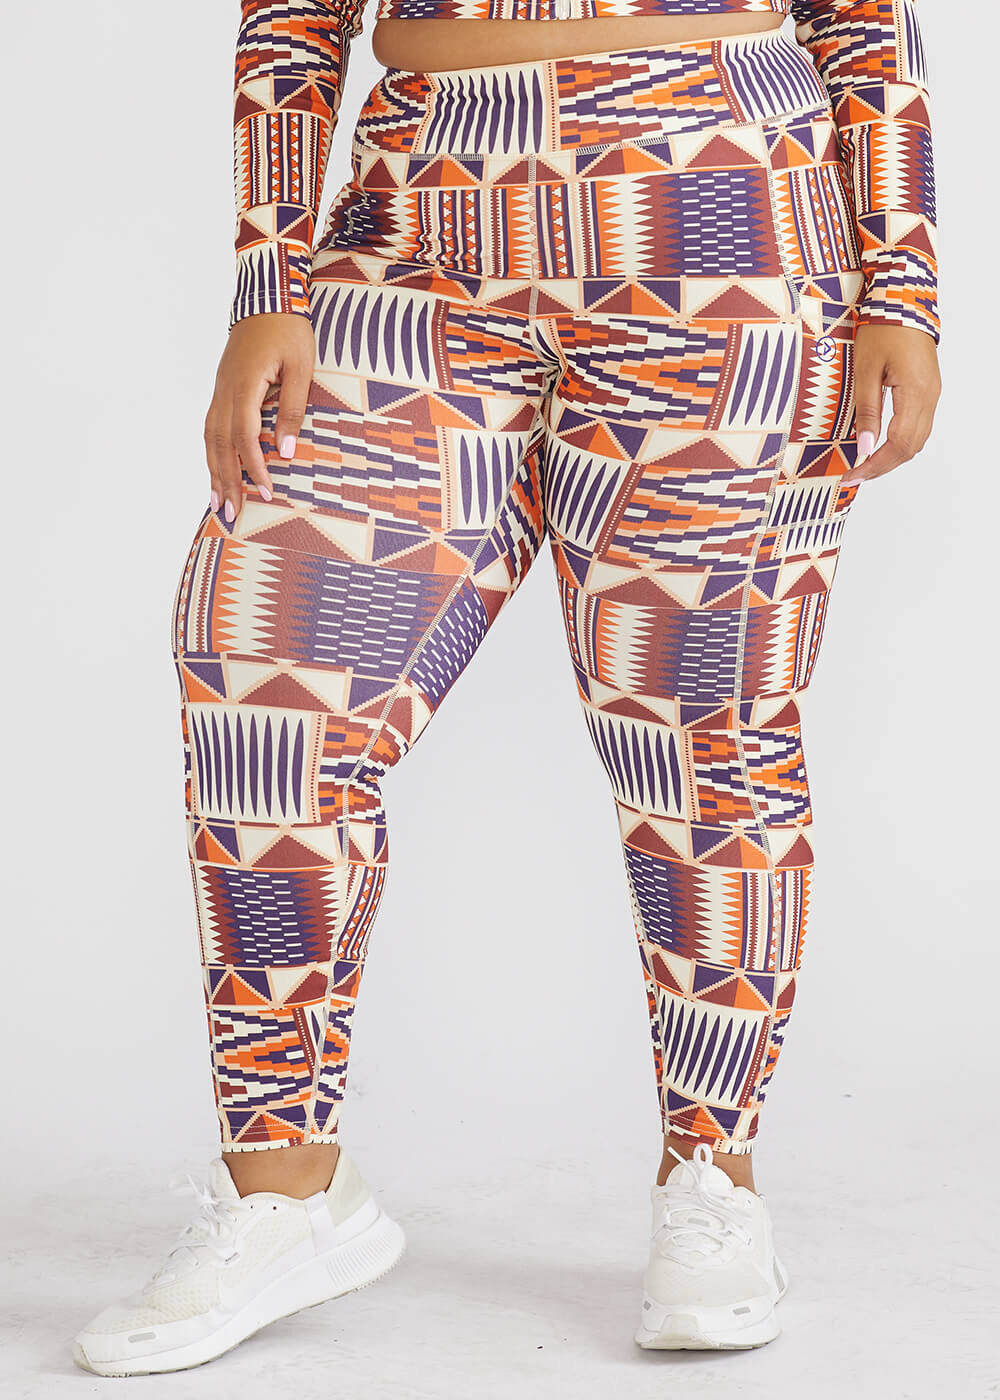 Washoge Esi Kente African Print Women's High Waist Yoga Tights / Pants  Workout Leggings with Pockets (XS-2X) 